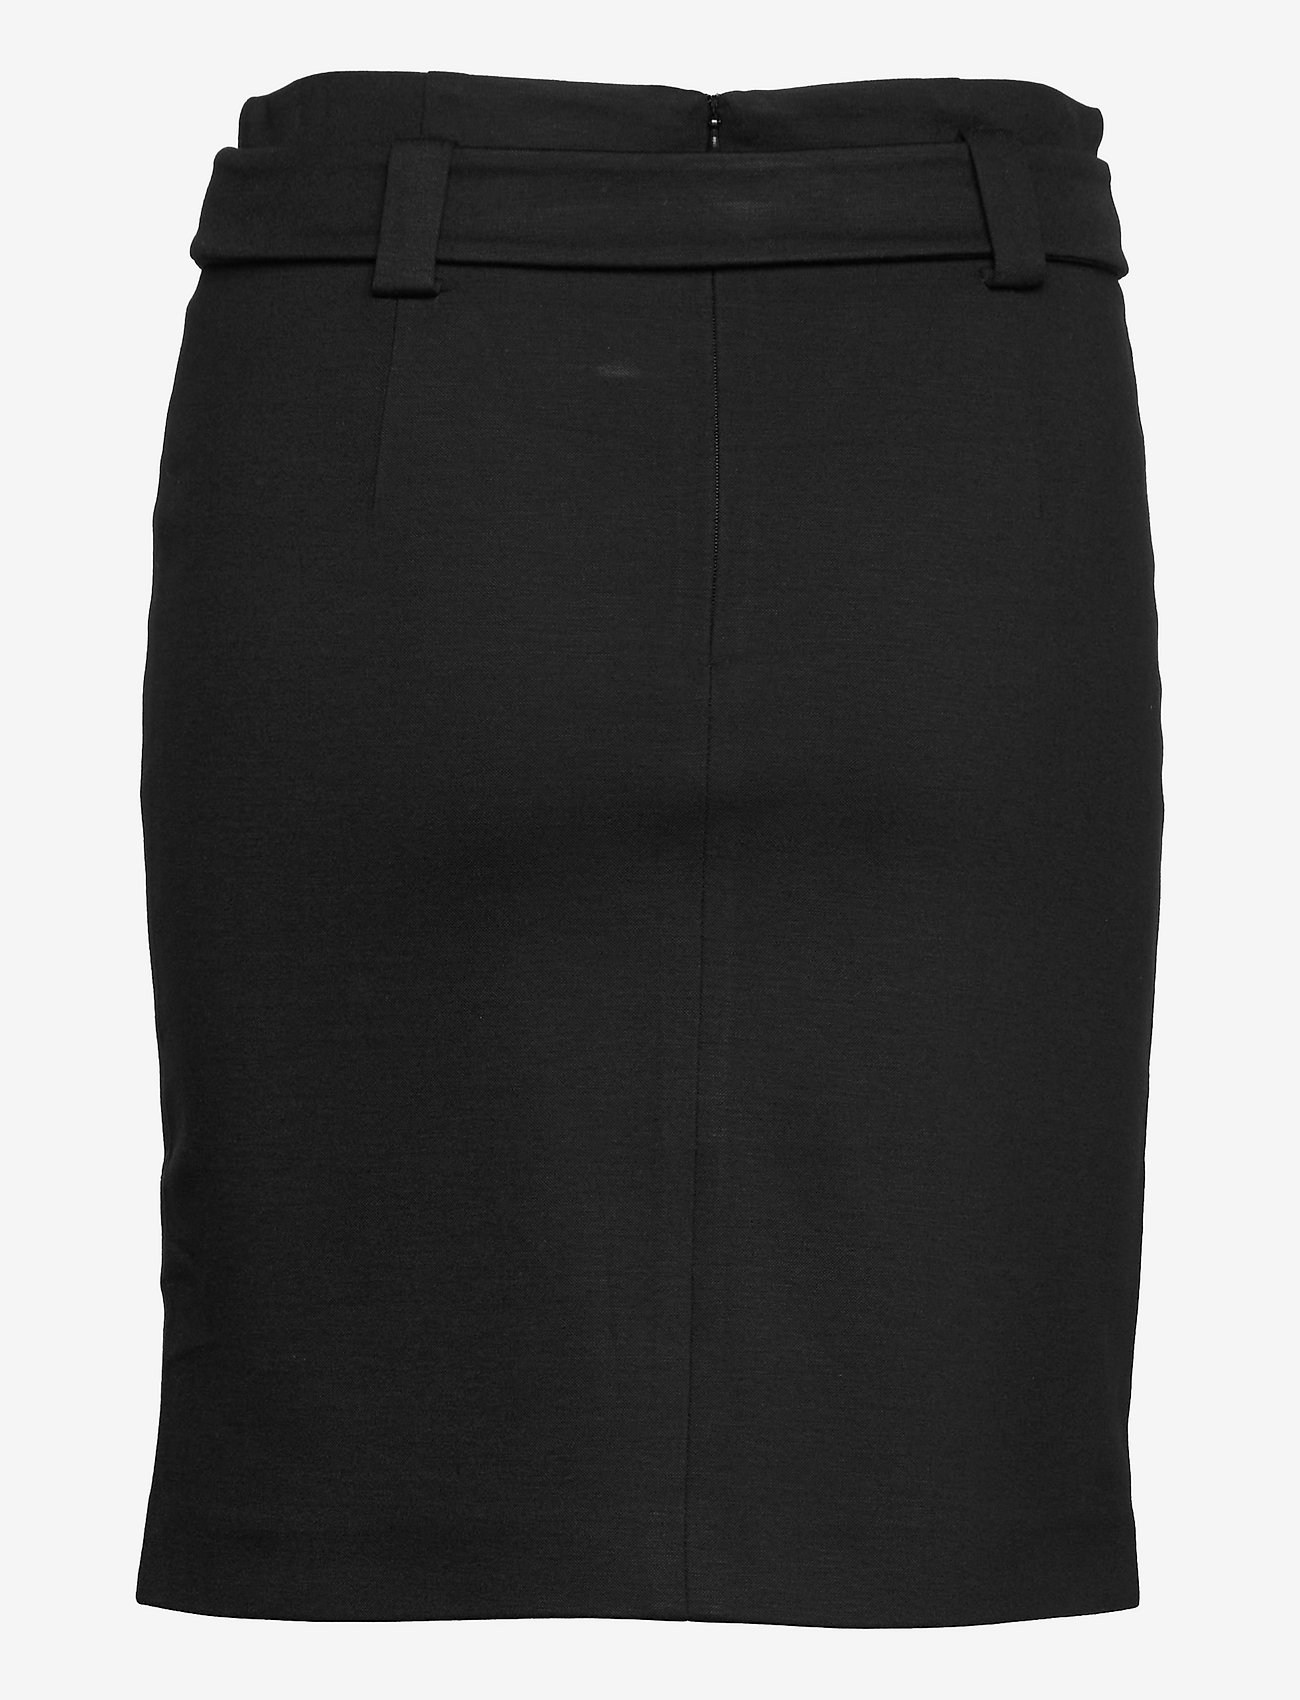 Esprit Collection - Fashion Skirt - short skirts - black - 1